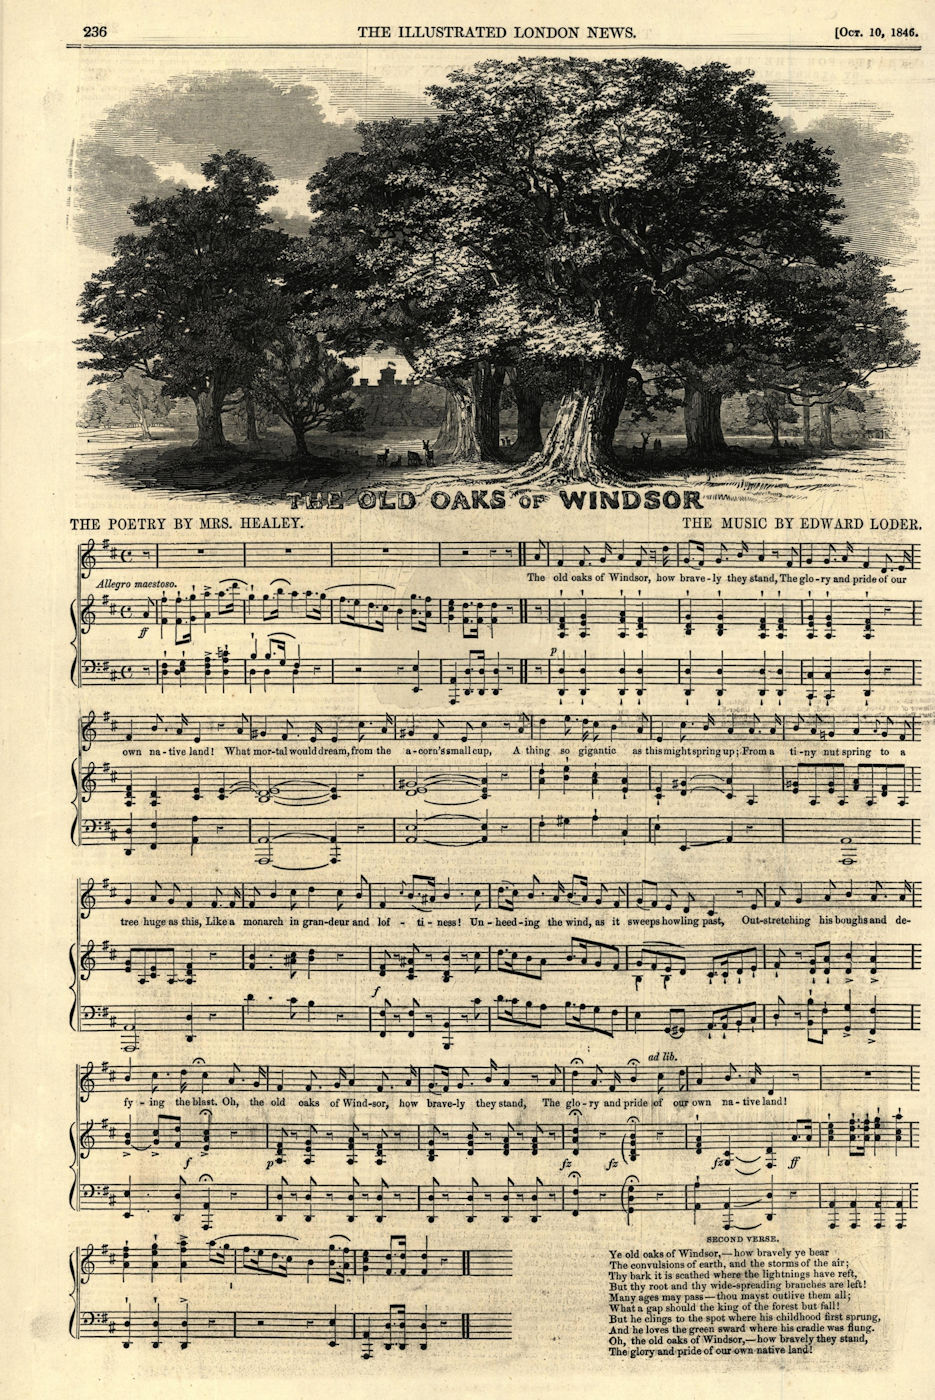 The Old Oaks of Windsor. Sheet music. Healey. Edward Loder 1846 ILN full page